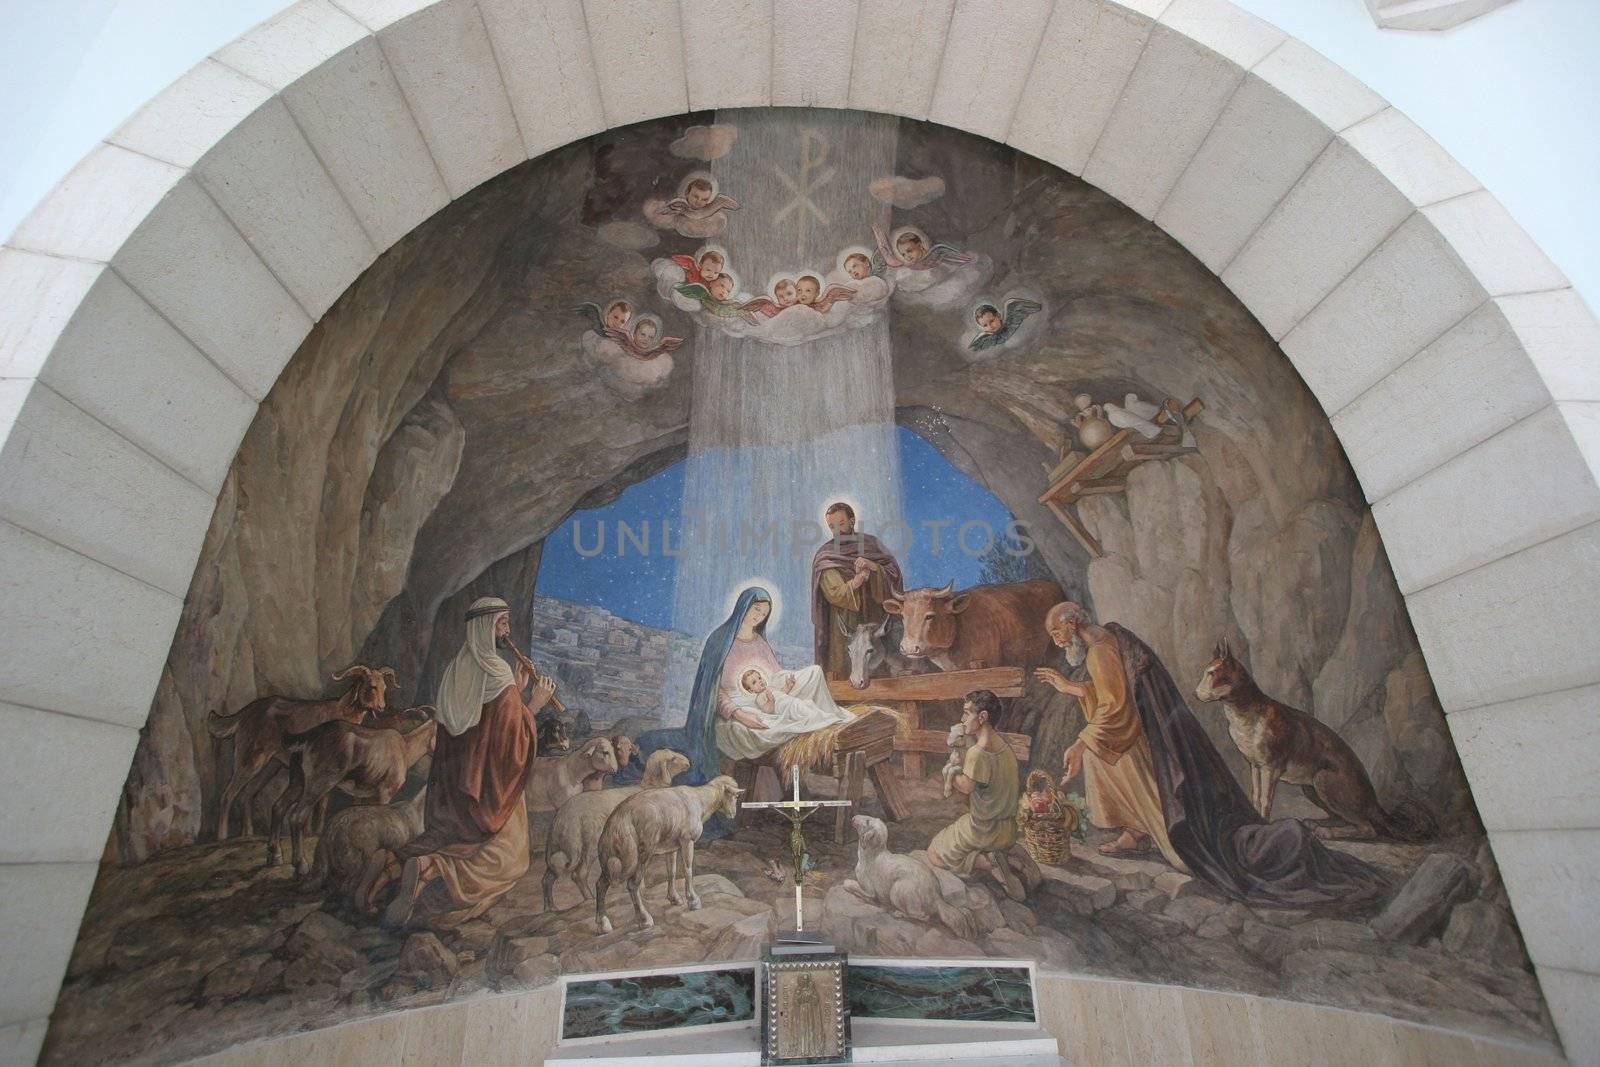 Nativity scene by atlas